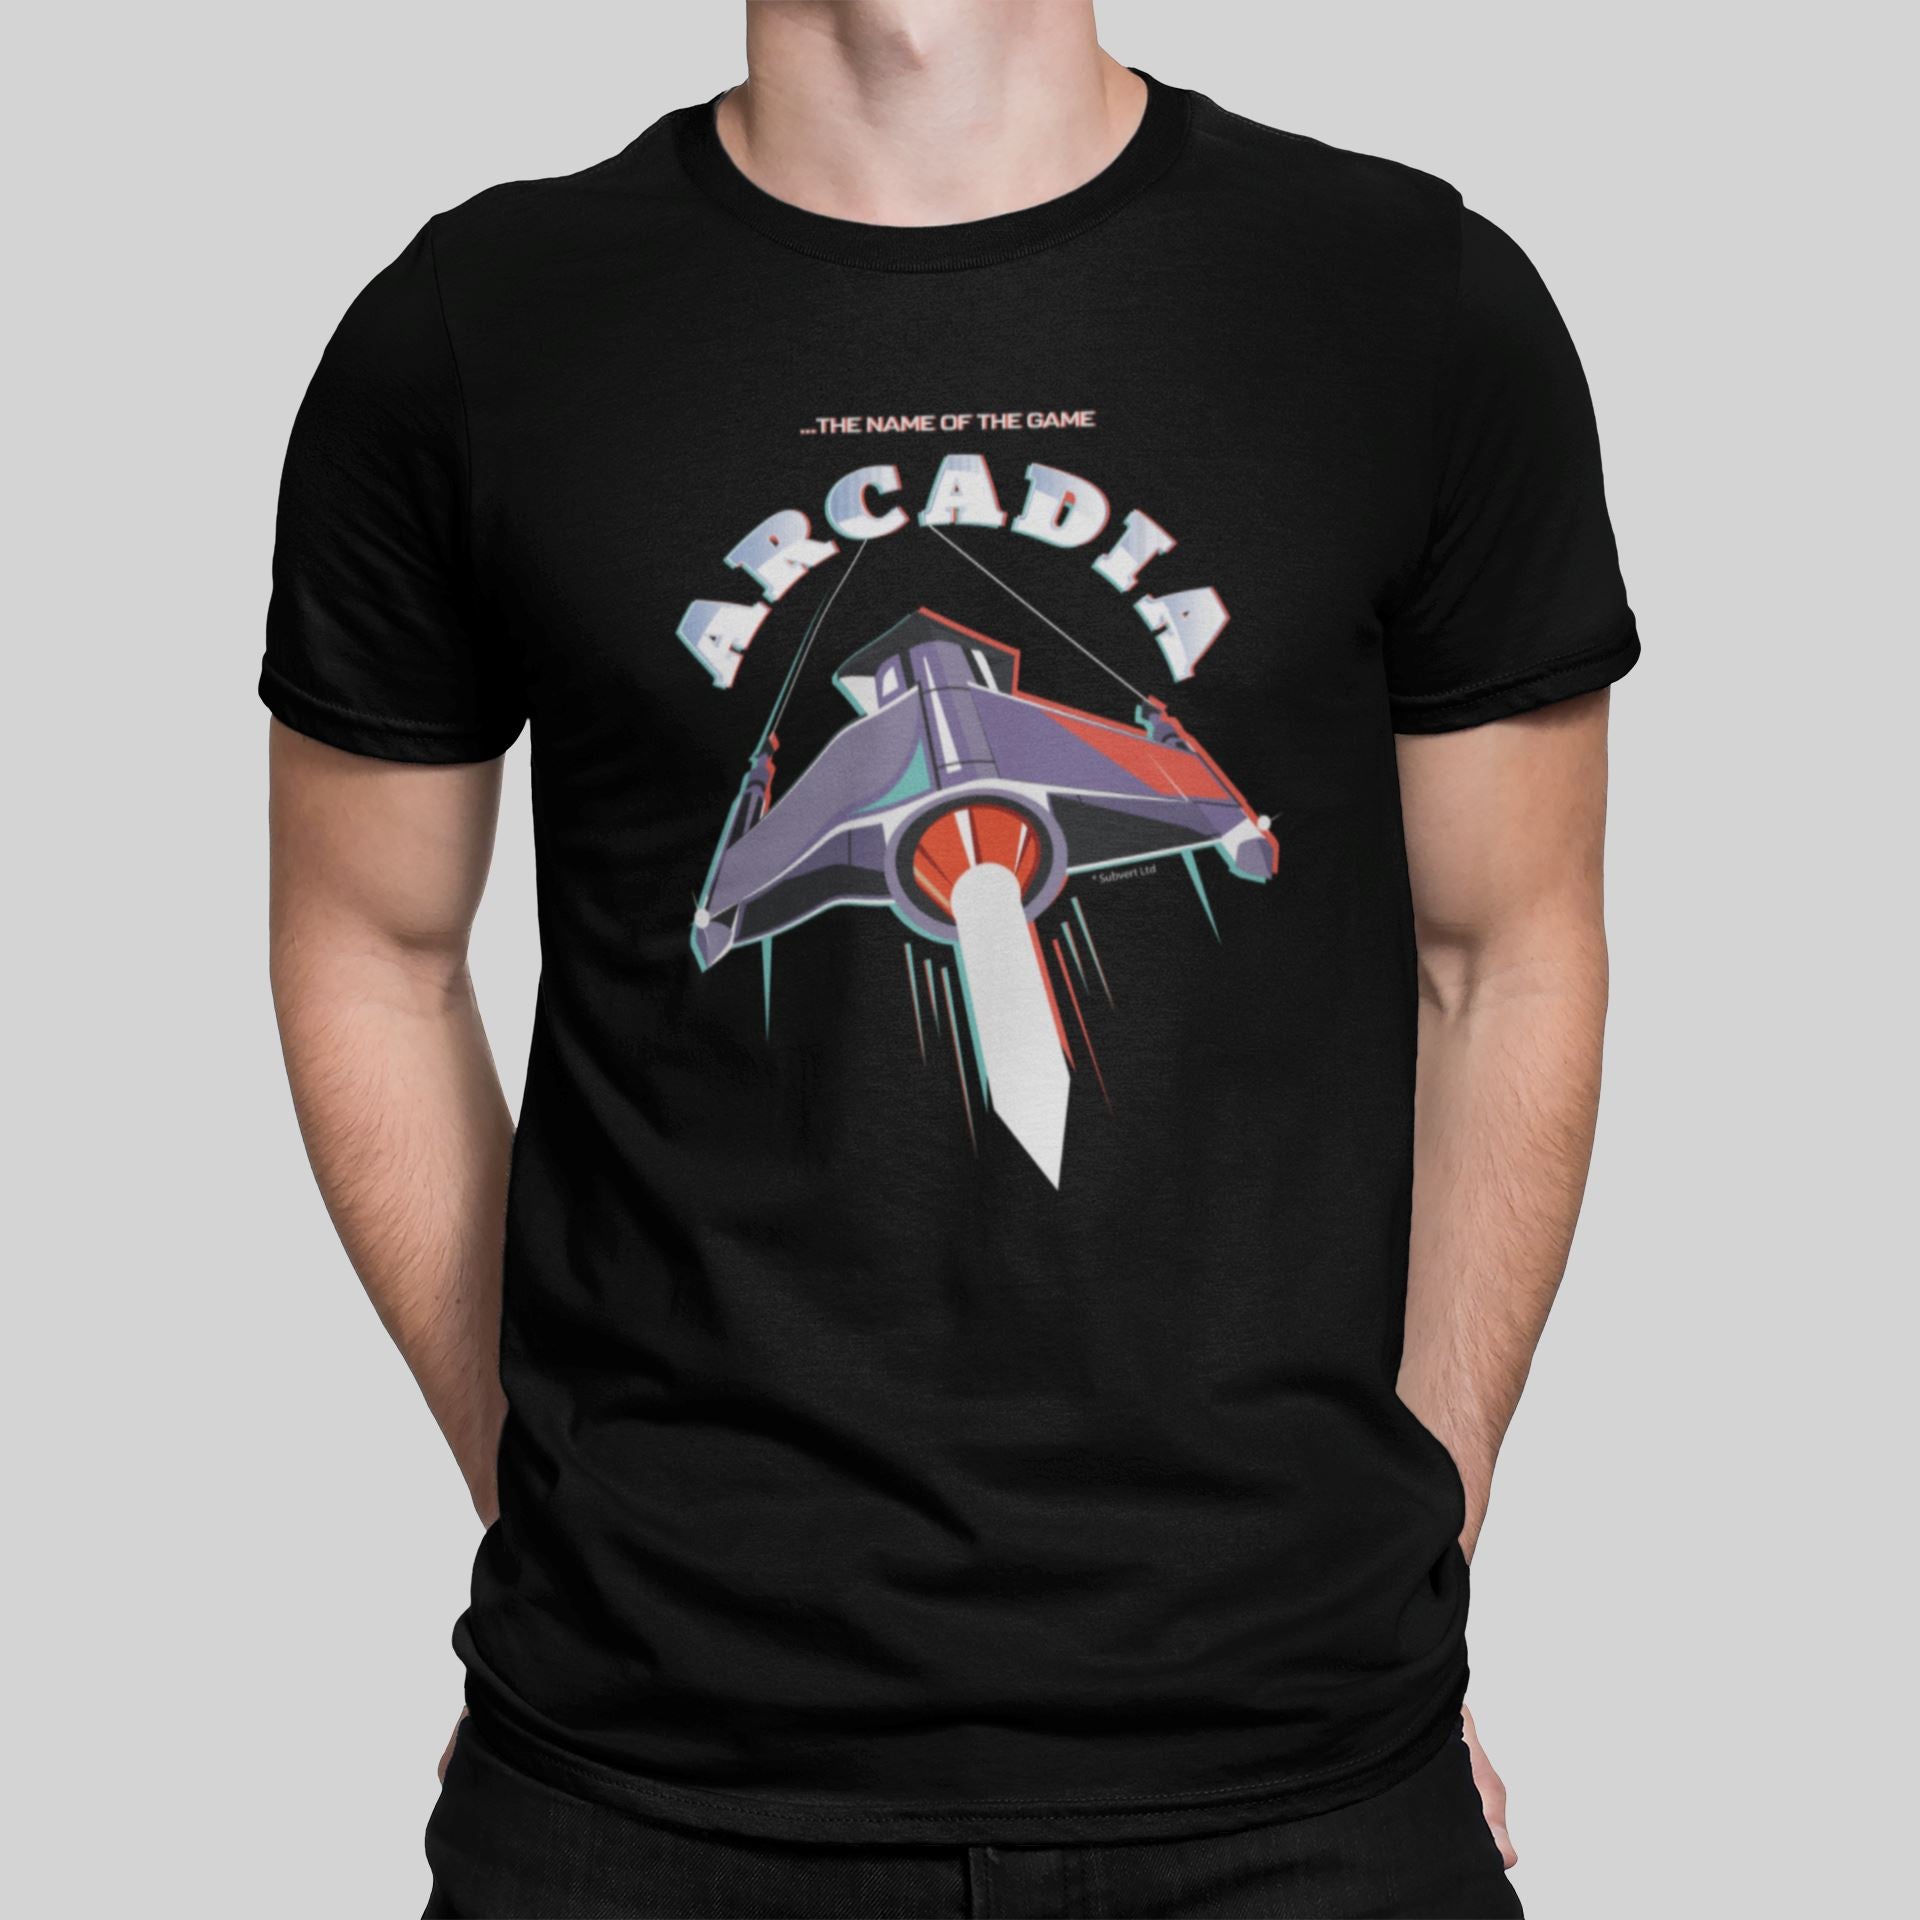 Arcadia Retro Gaming T-Shirt T-Shirt Seven Squared Small 34-36" Black 